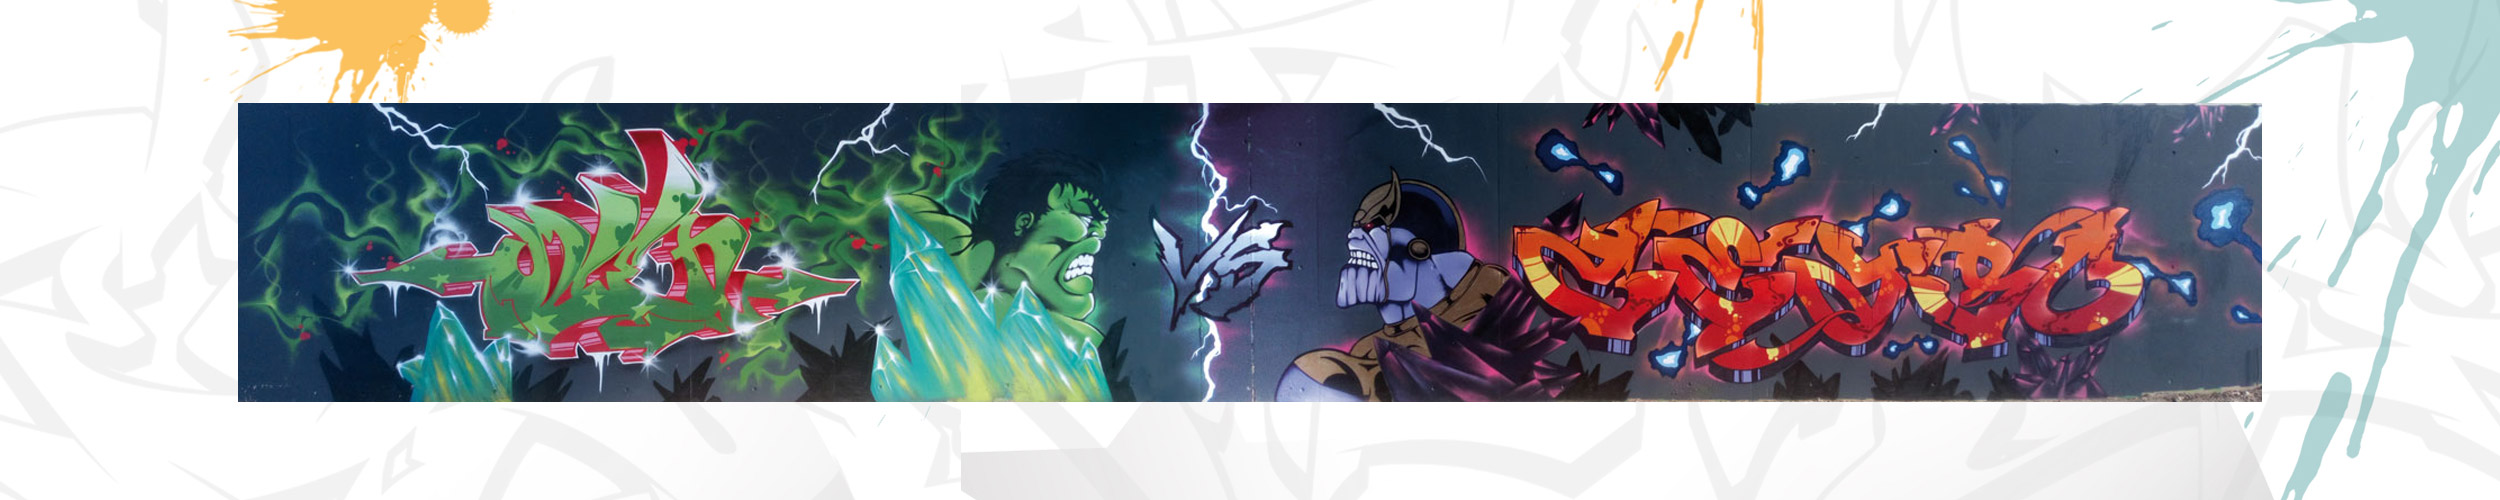 graffiti-hulk-vs-thanos